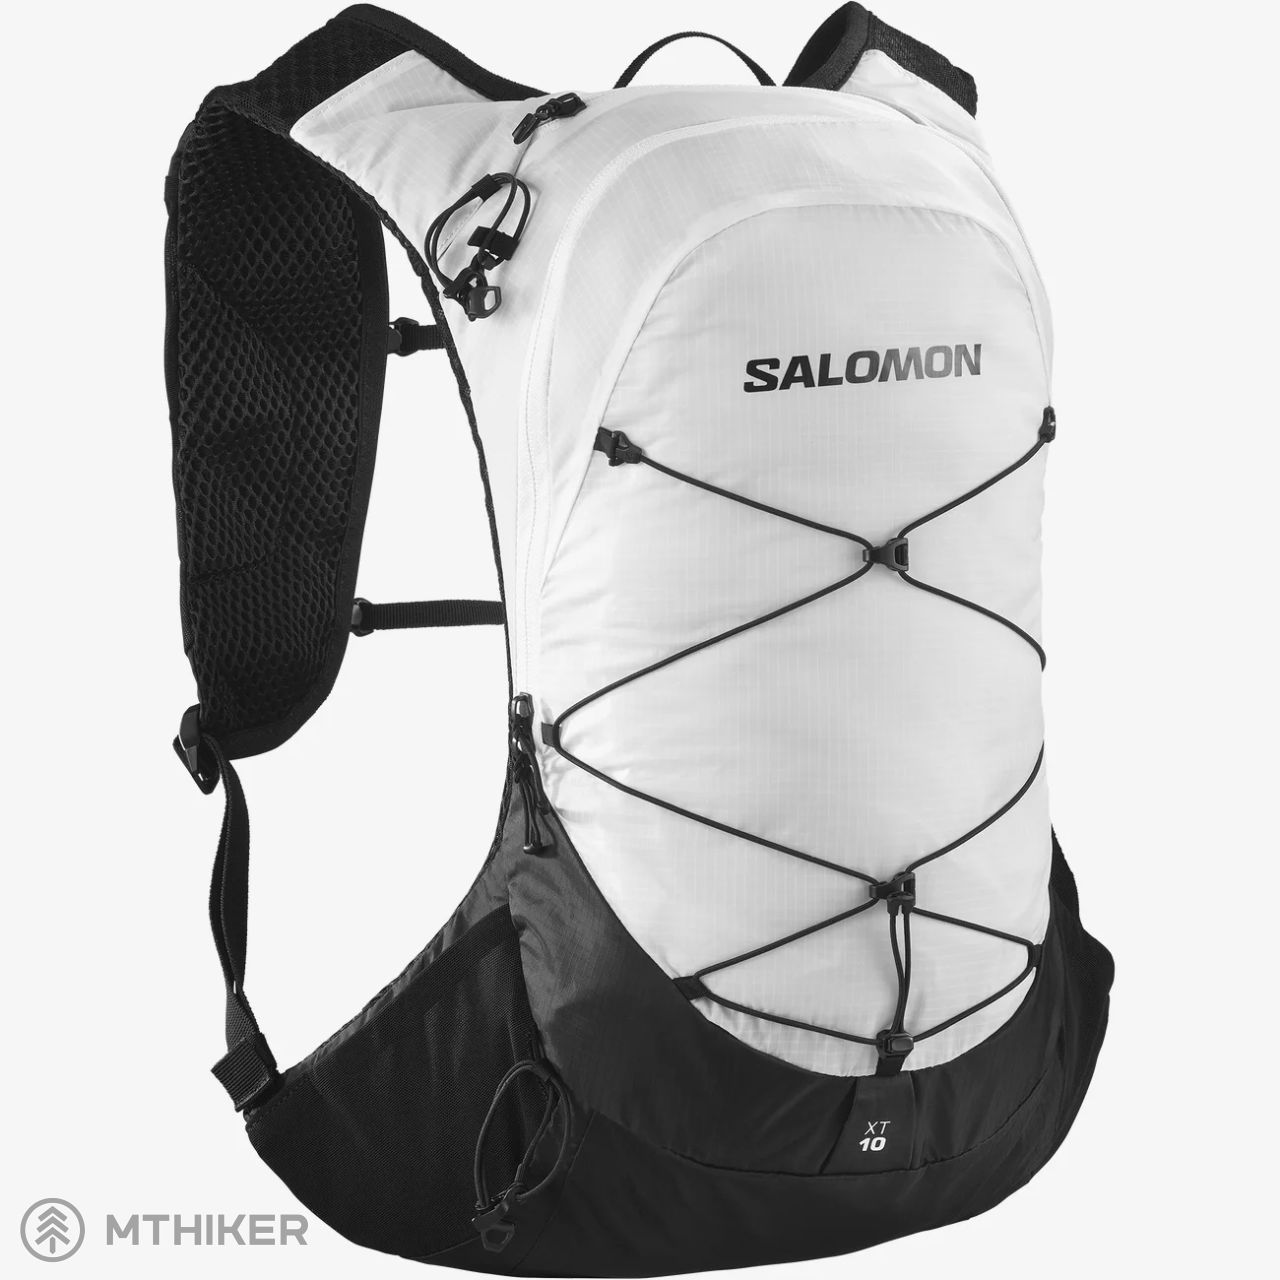 Salomon XT 10 backpack, l, white/black - MTBIKER.shop